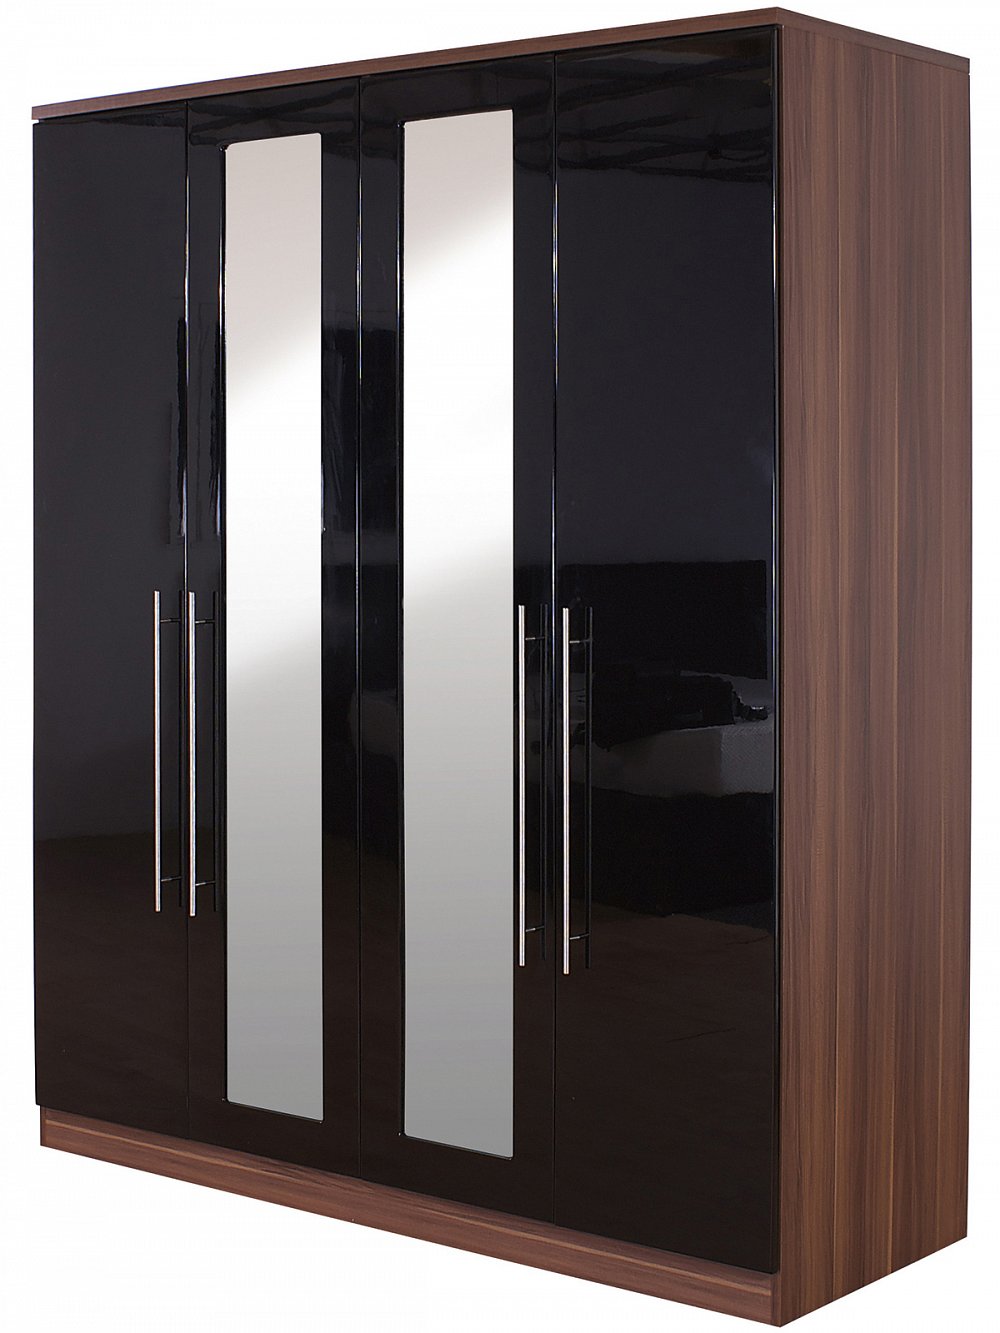 GFW Furniture Modular 4 Door + Mirror Wardrobe